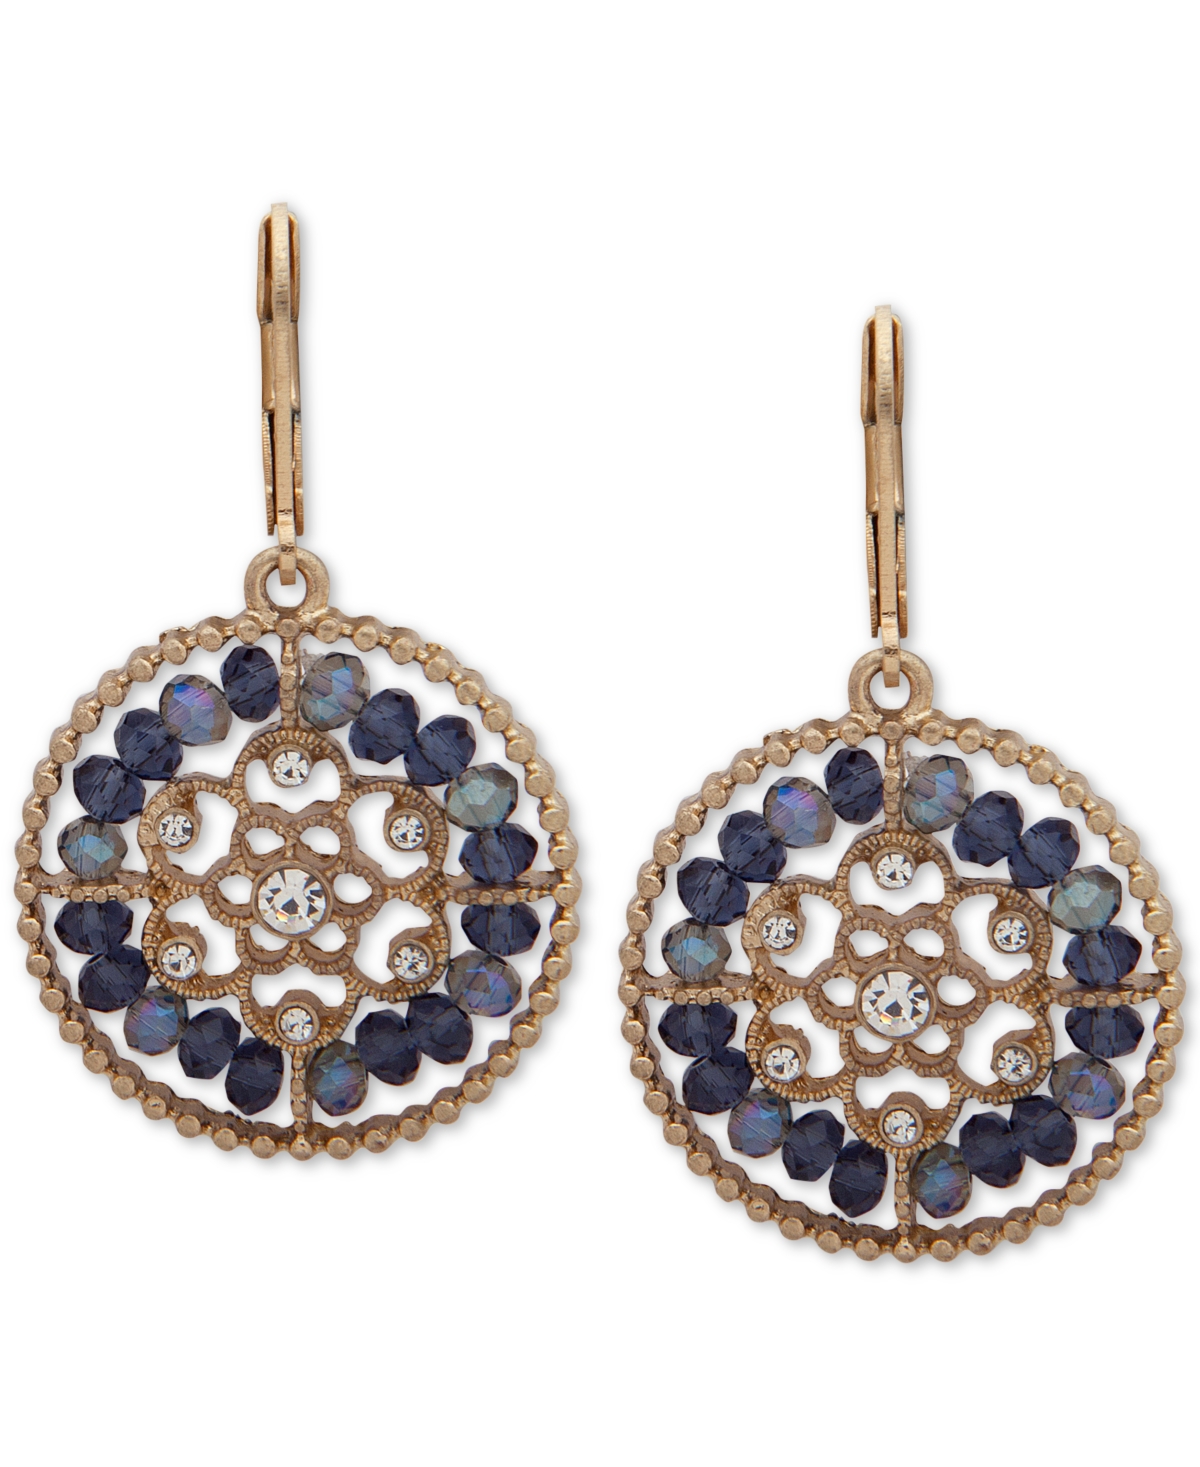 Gold-Tone Crystal & Bead Openwork Drop Earrings - Blue